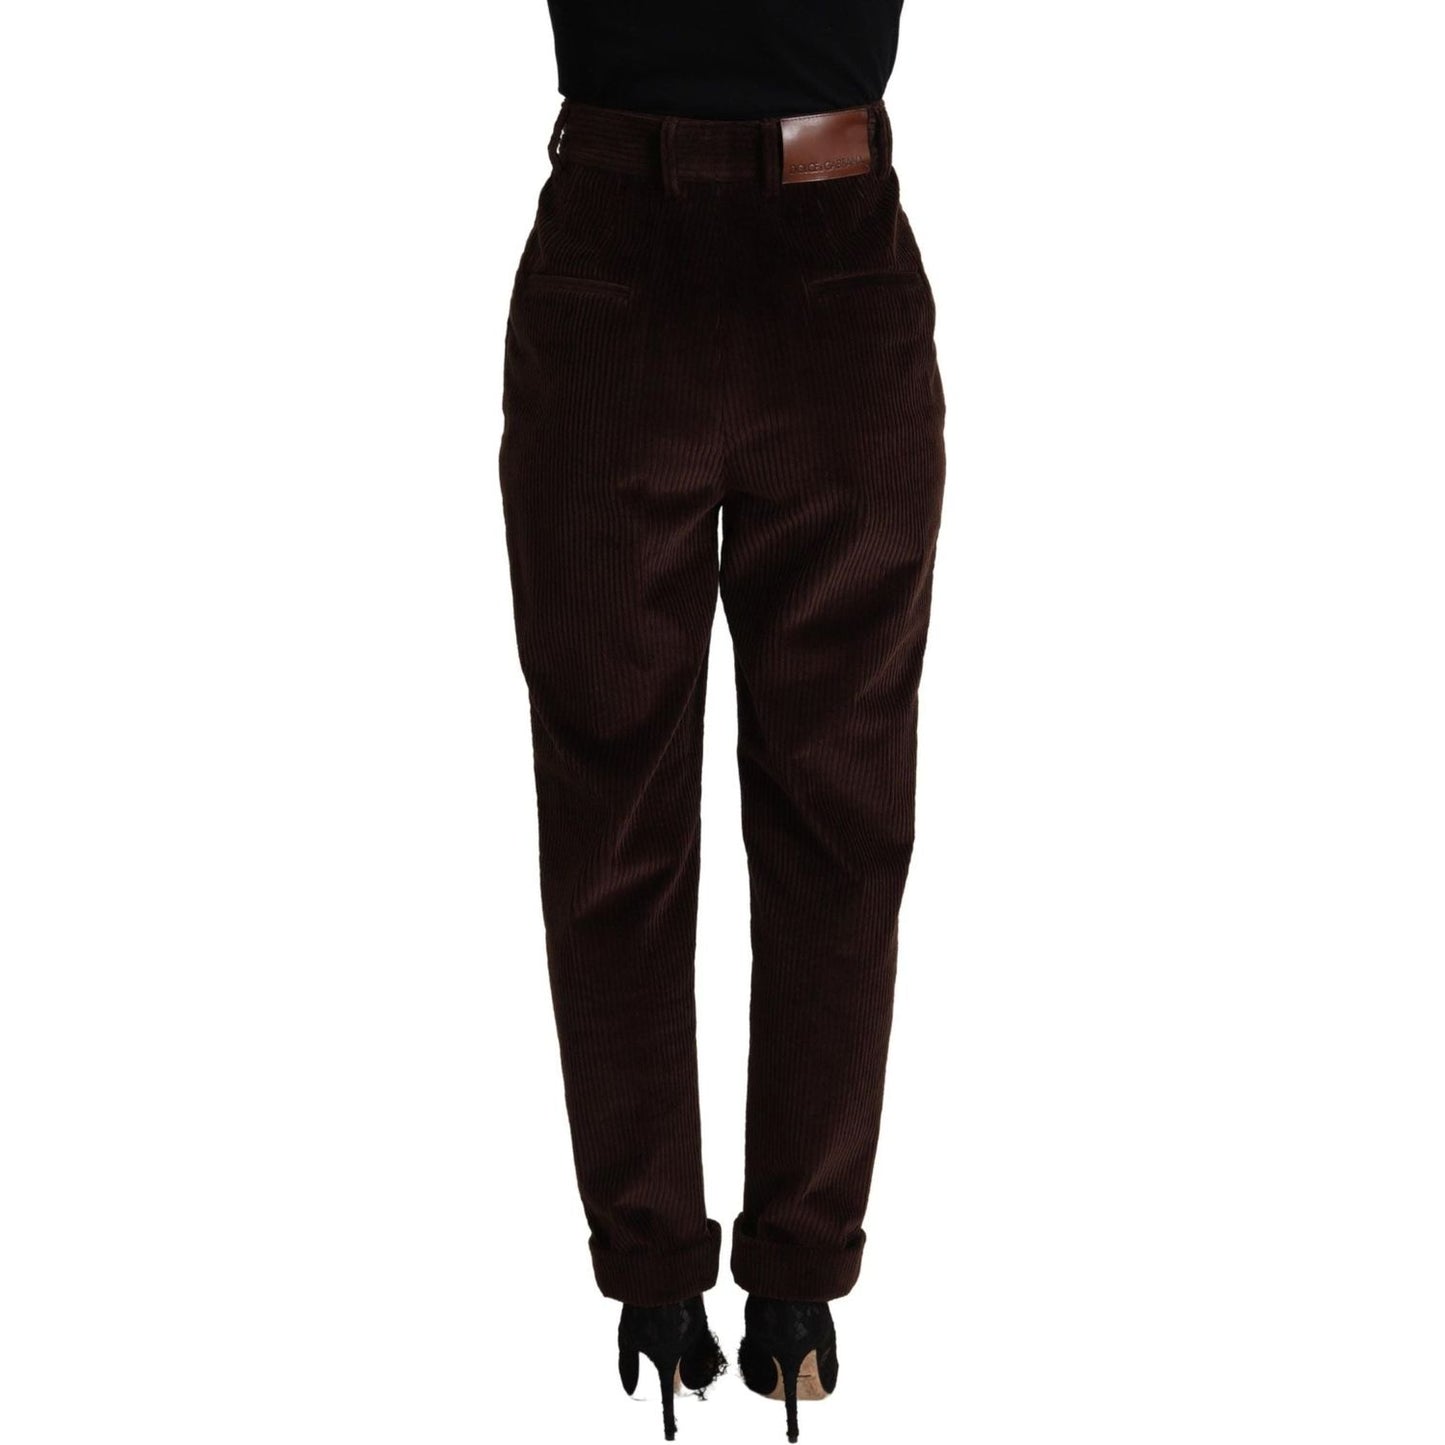 Dolce & Gabbana Elegant Bordeaux High-Waisted Corduroy Pants bordeaux-corduroy-cotton-trouser-tapered-pants IMG_0576-scaled-e0af7aa3-3e1.jpg